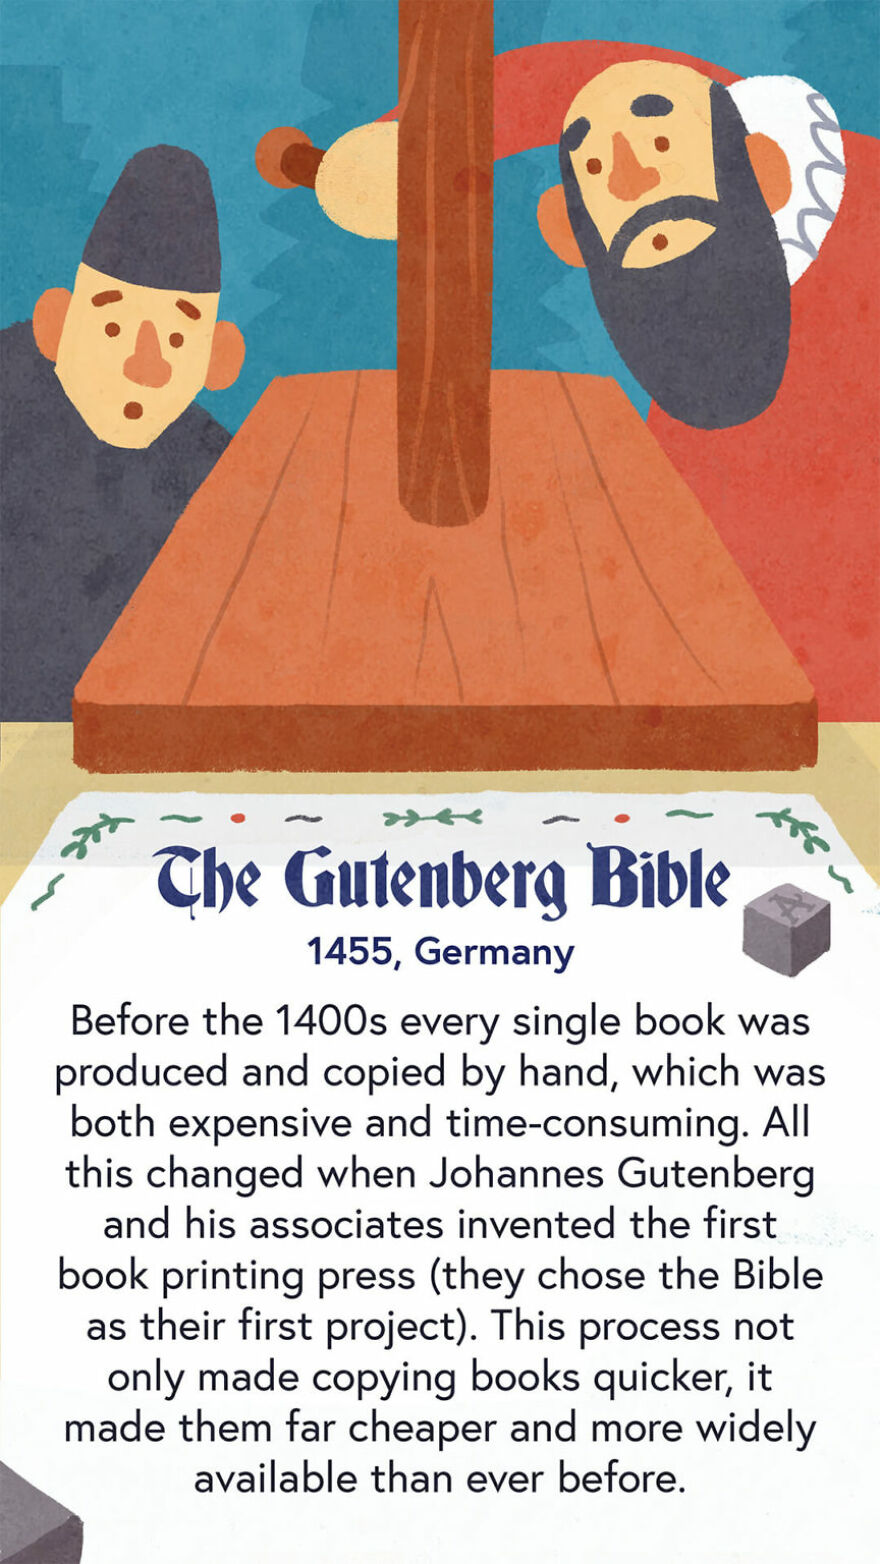 The Gutenberg Bible, 1455, Germany